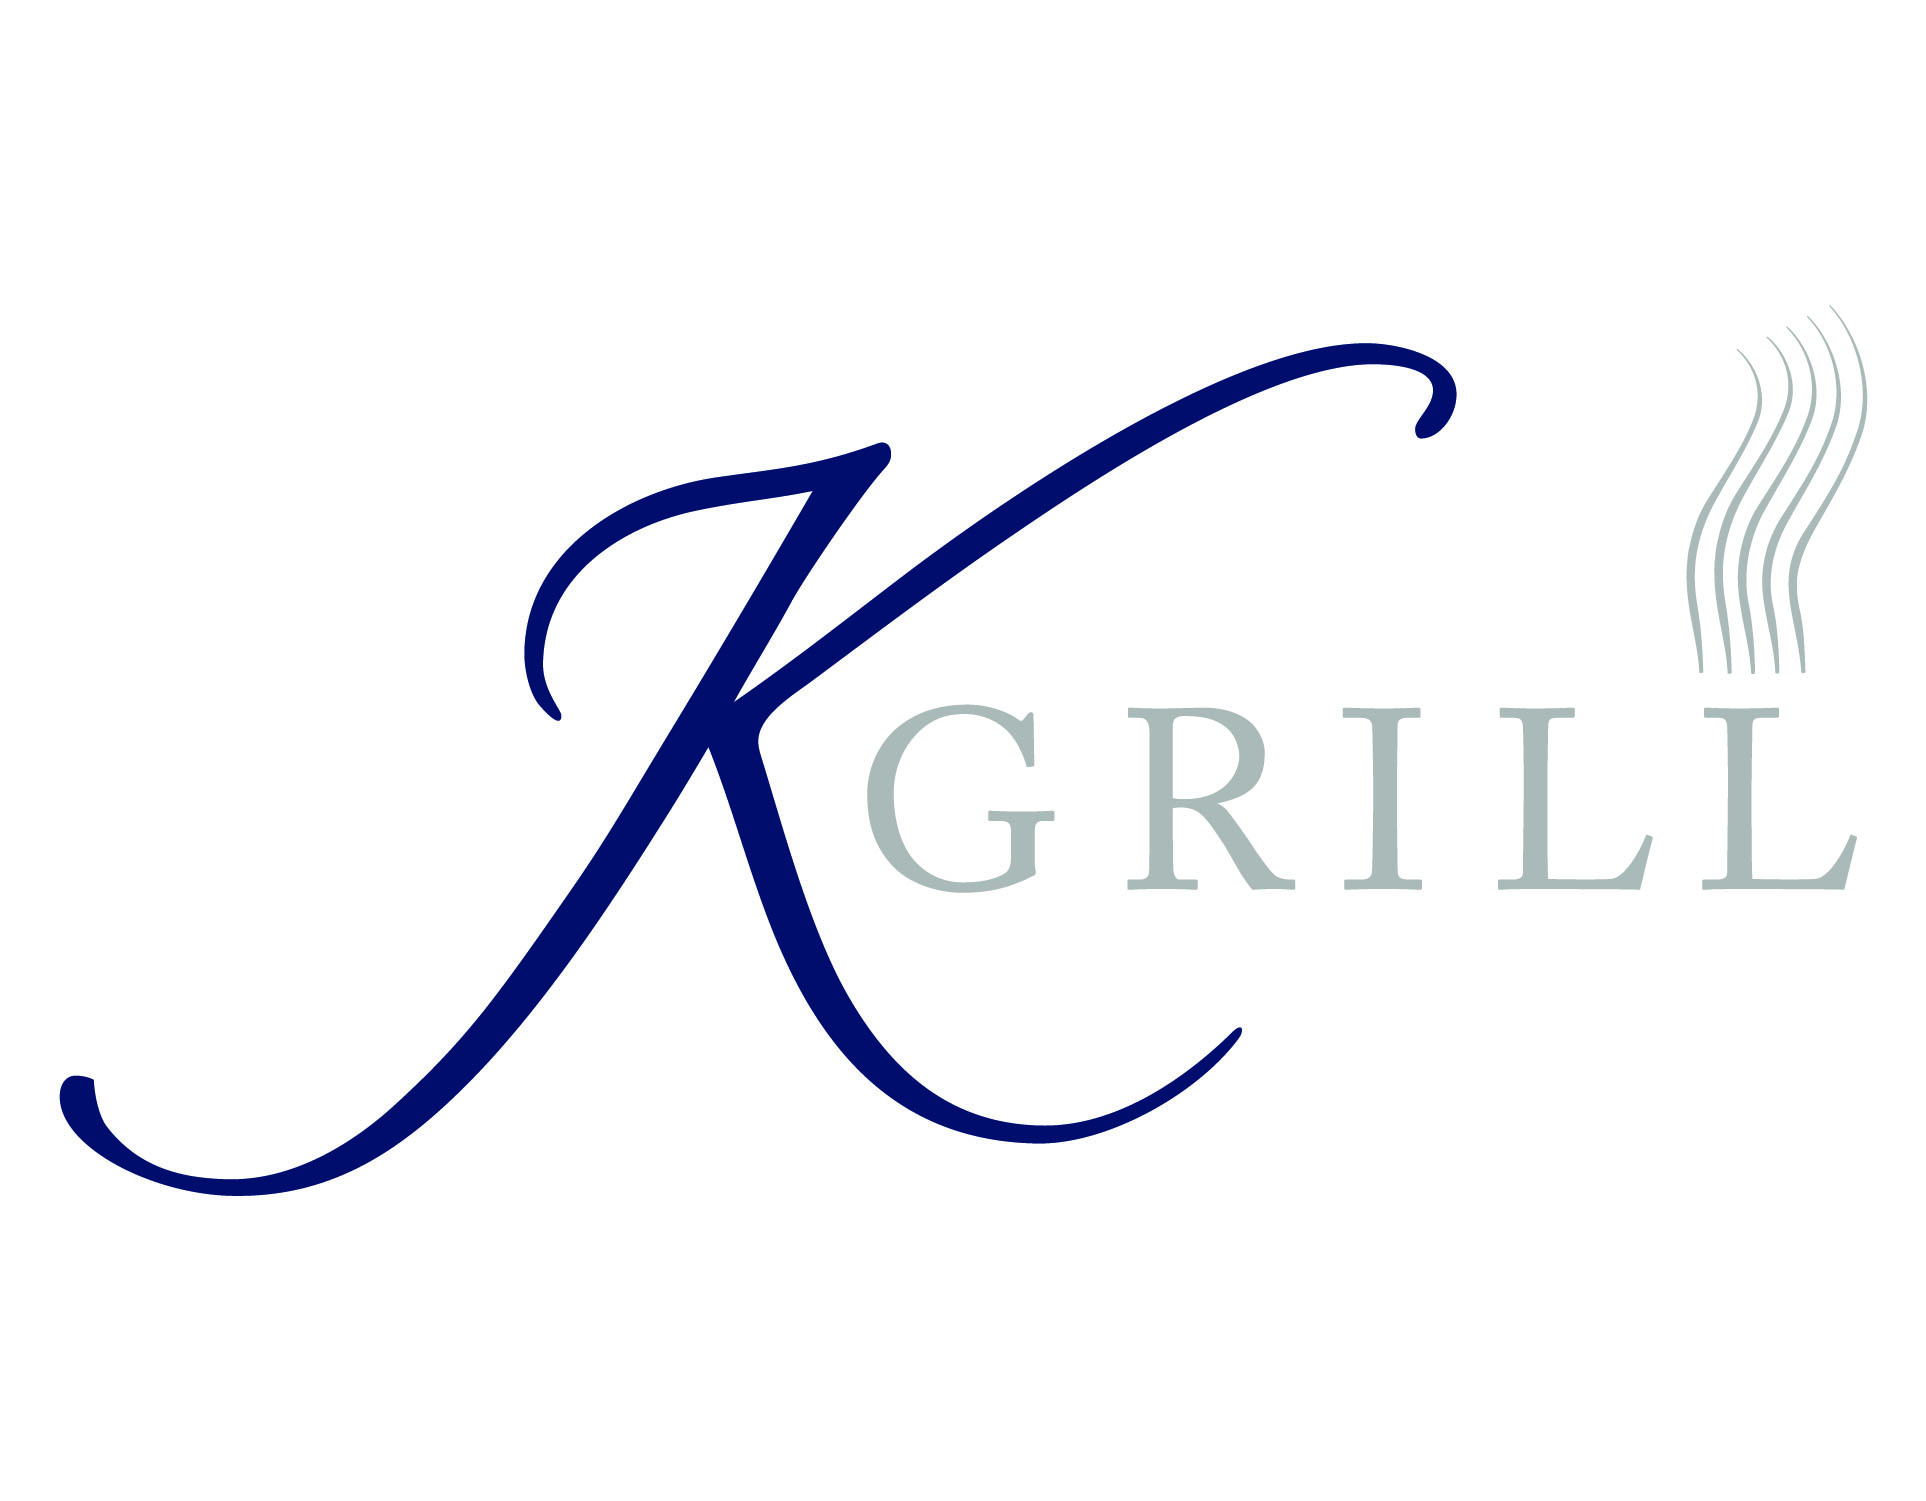 KGrill Logo